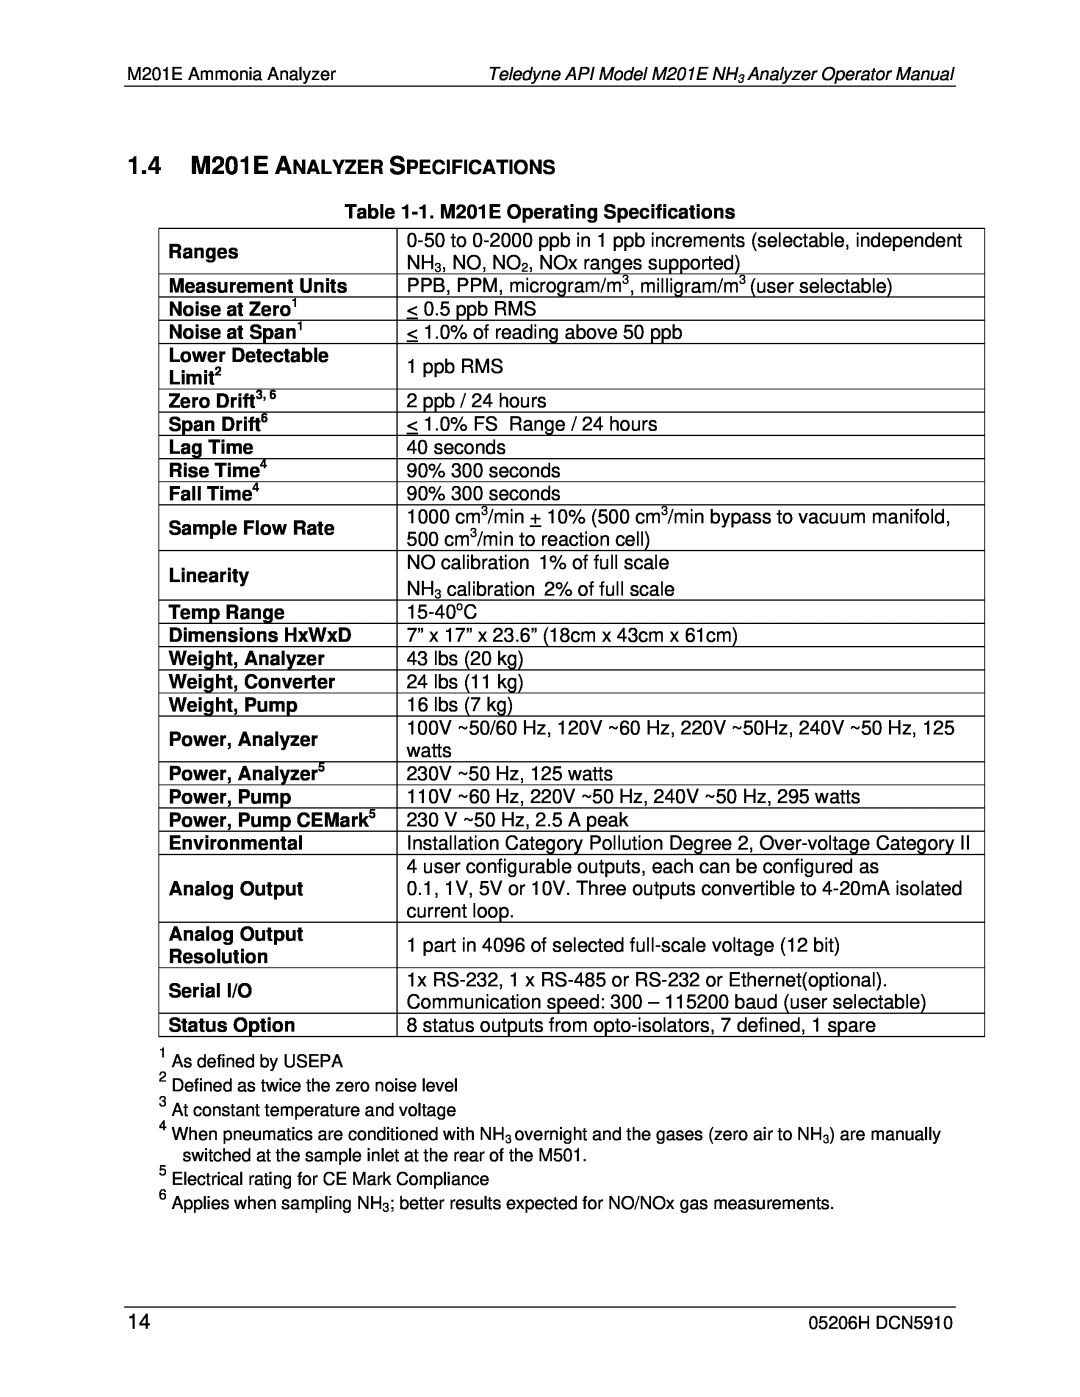 Teledyne manual 1.4M201E ANALYZER SPECIFICATIONS 